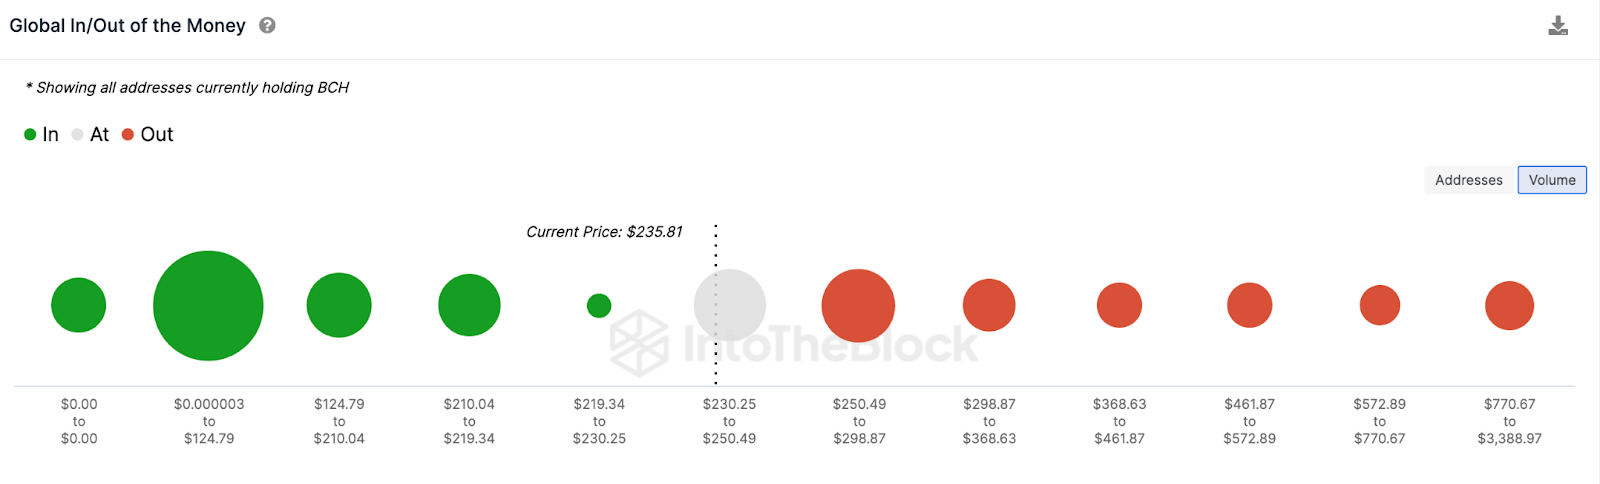 GIOM price data, August 2023. IntoTheBlock